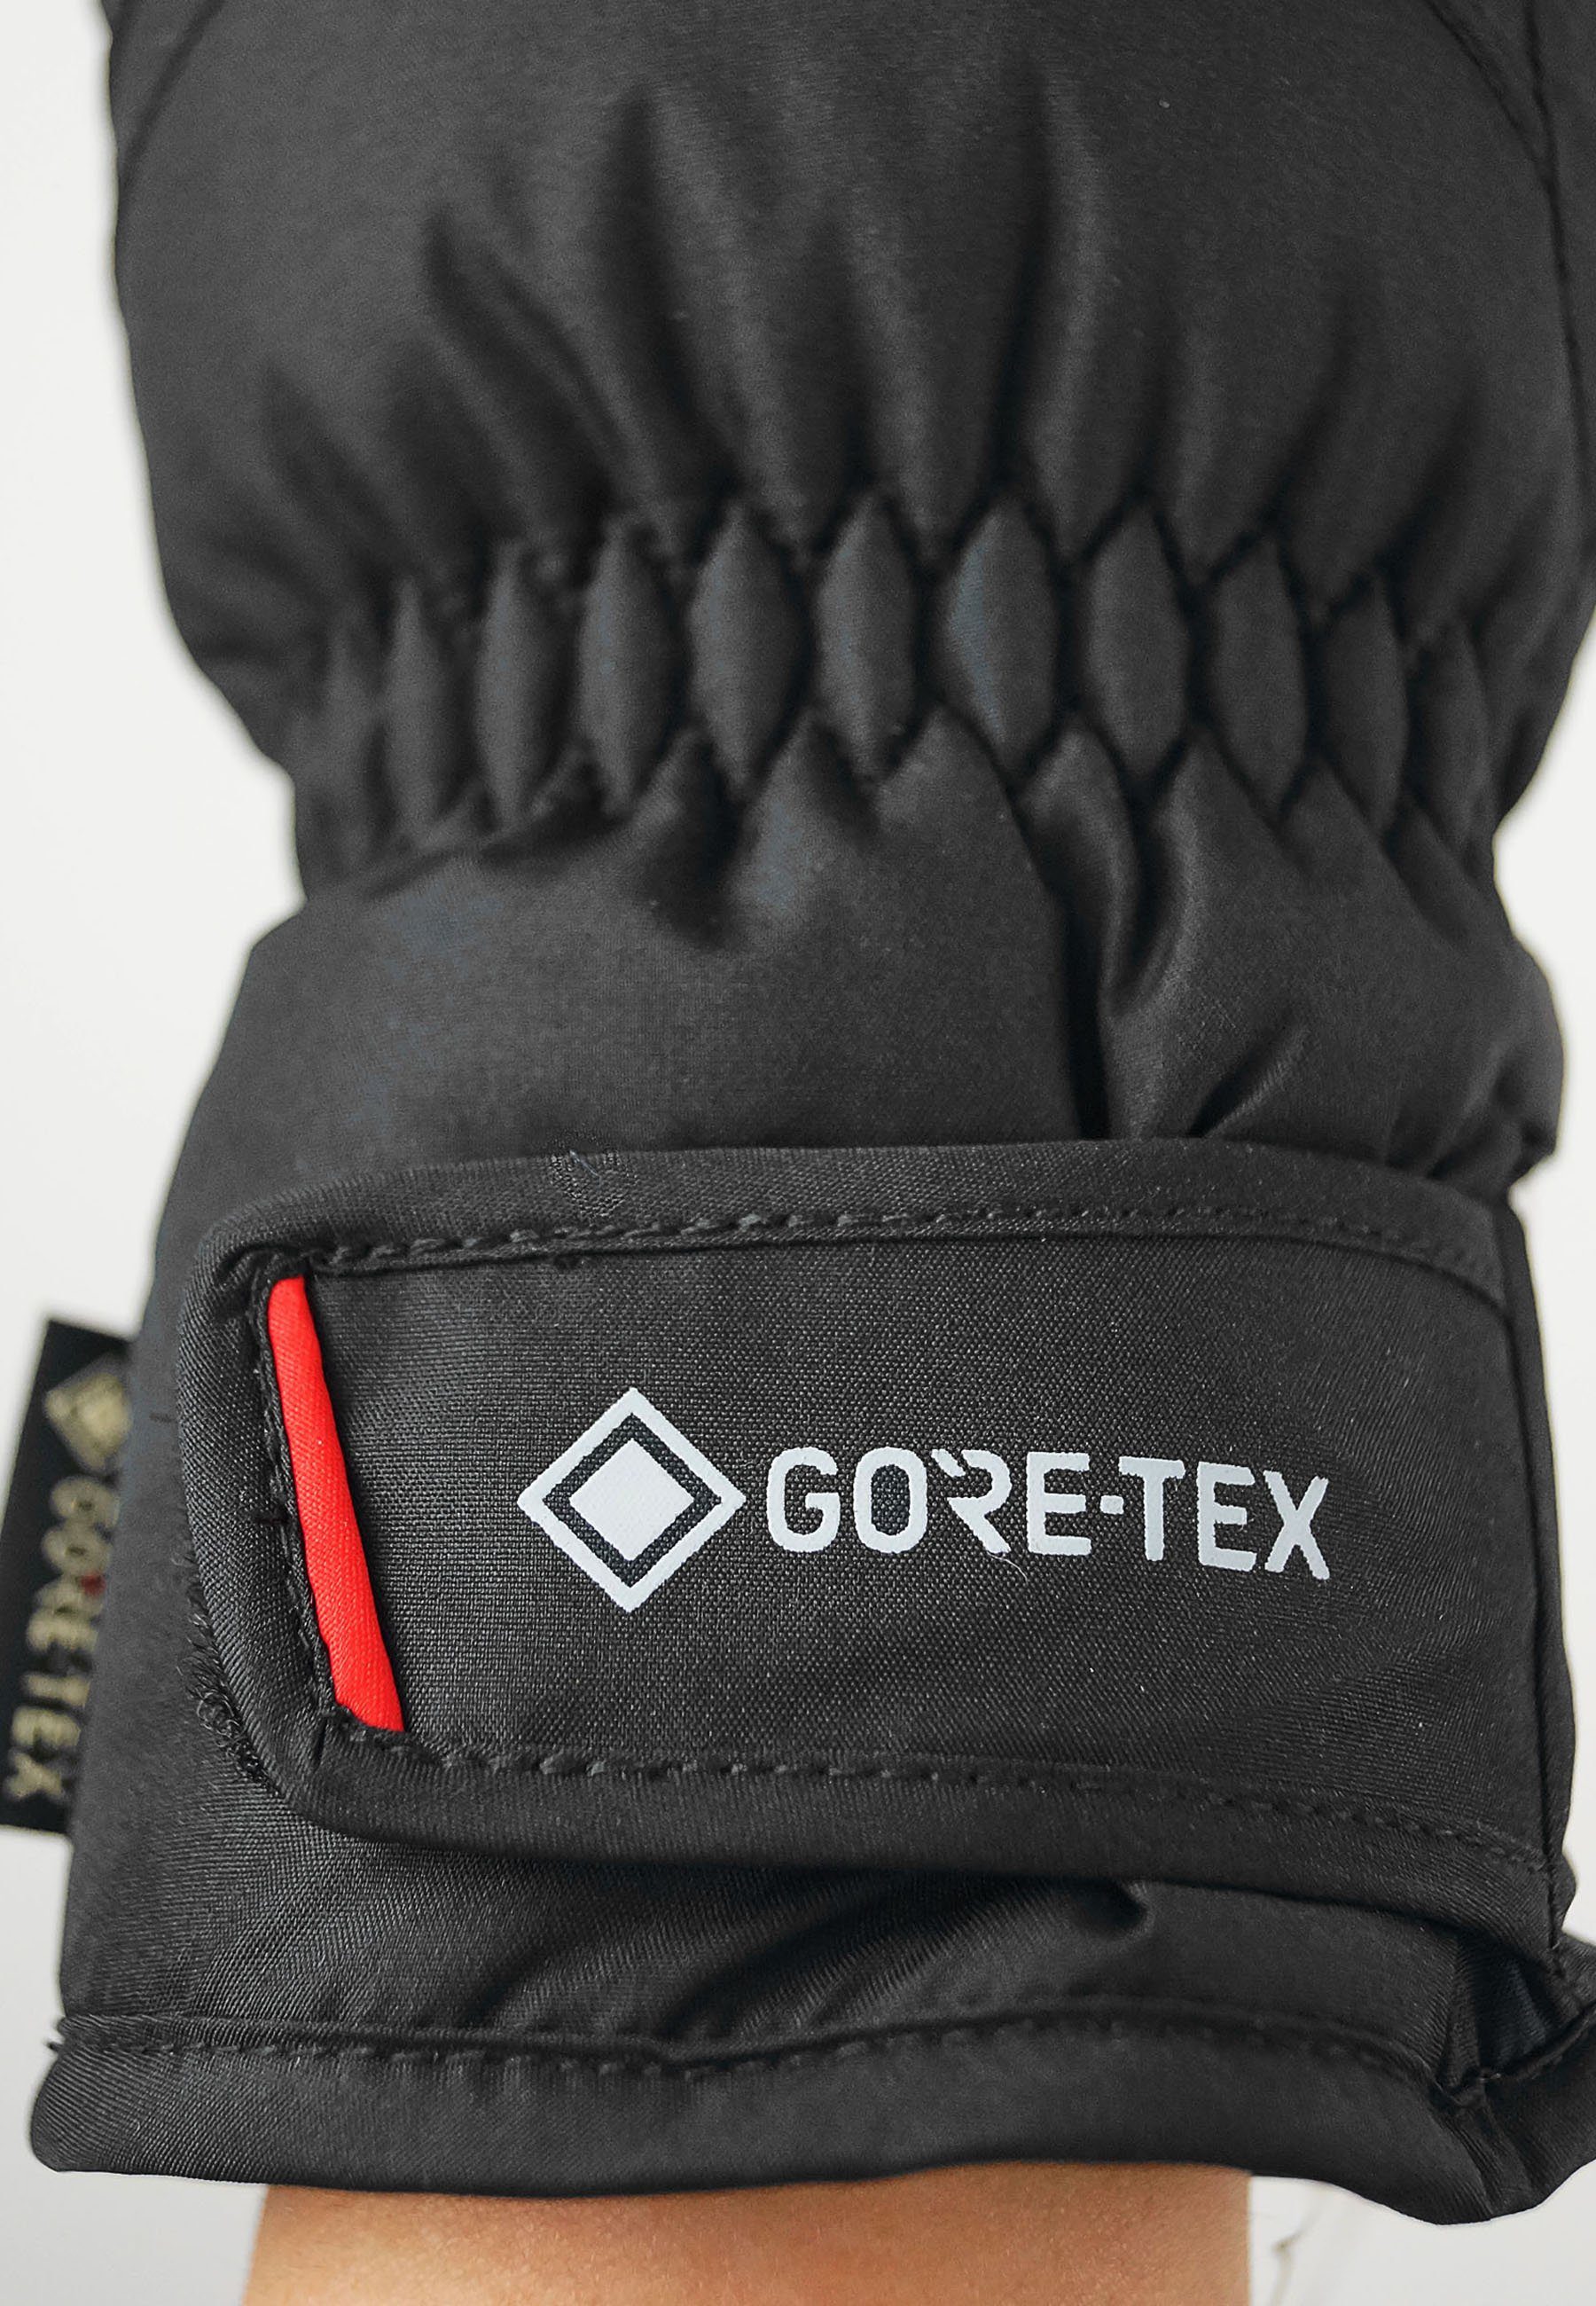 Reusch Skihandschuhe Teddy GORE-TEX rot-schwarz Funktionsmembran mit wasserdichter